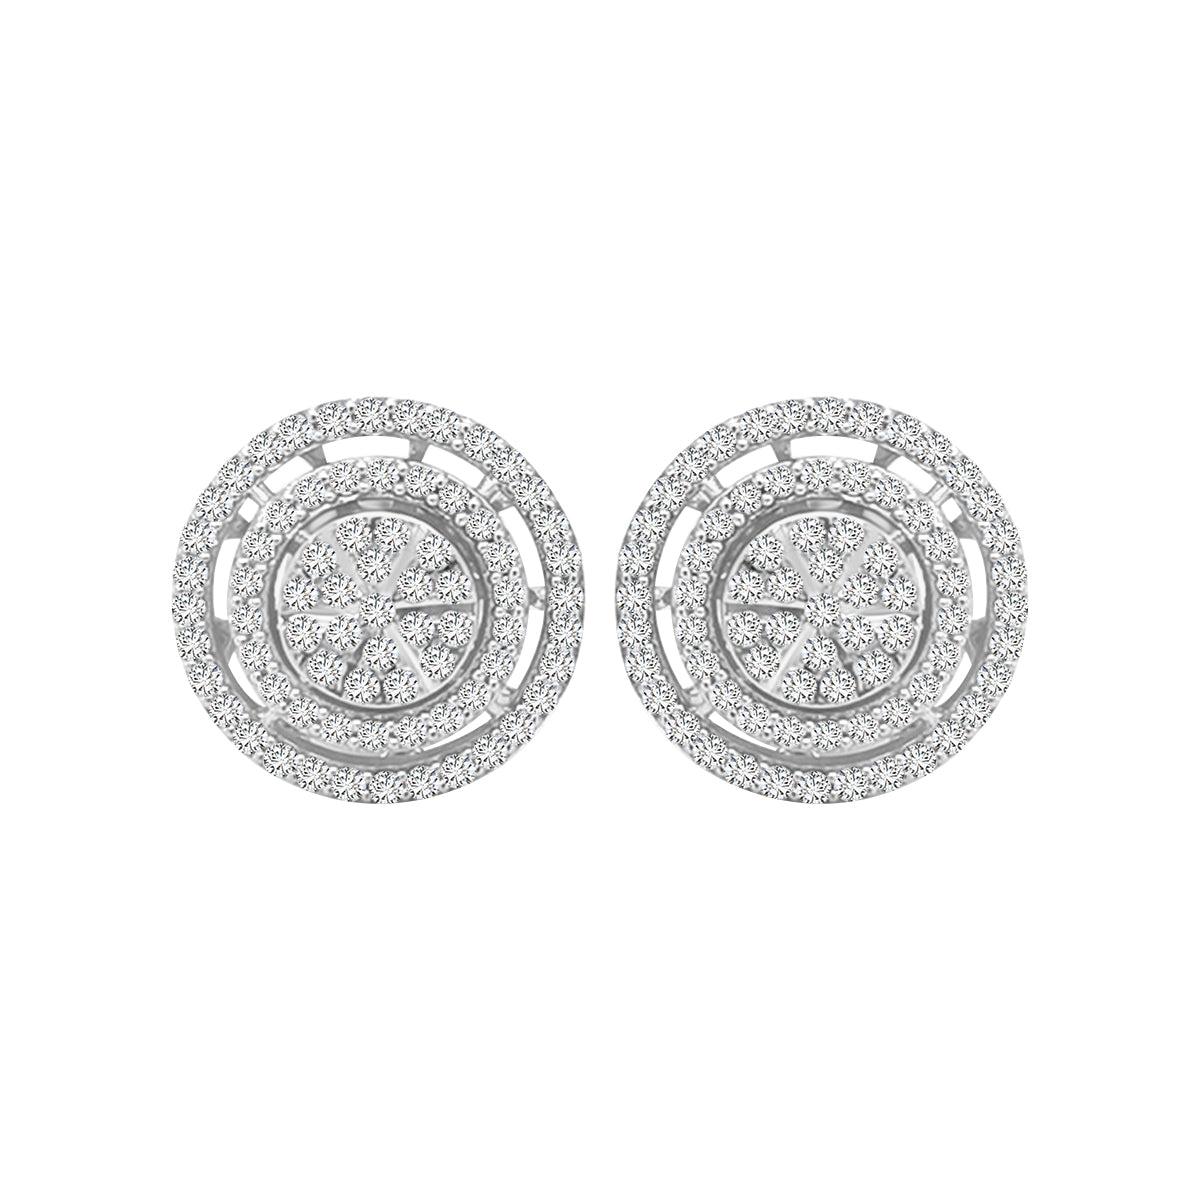 Two Halo Cluster Set Diamond Stud Earrings In 18k White Gold.